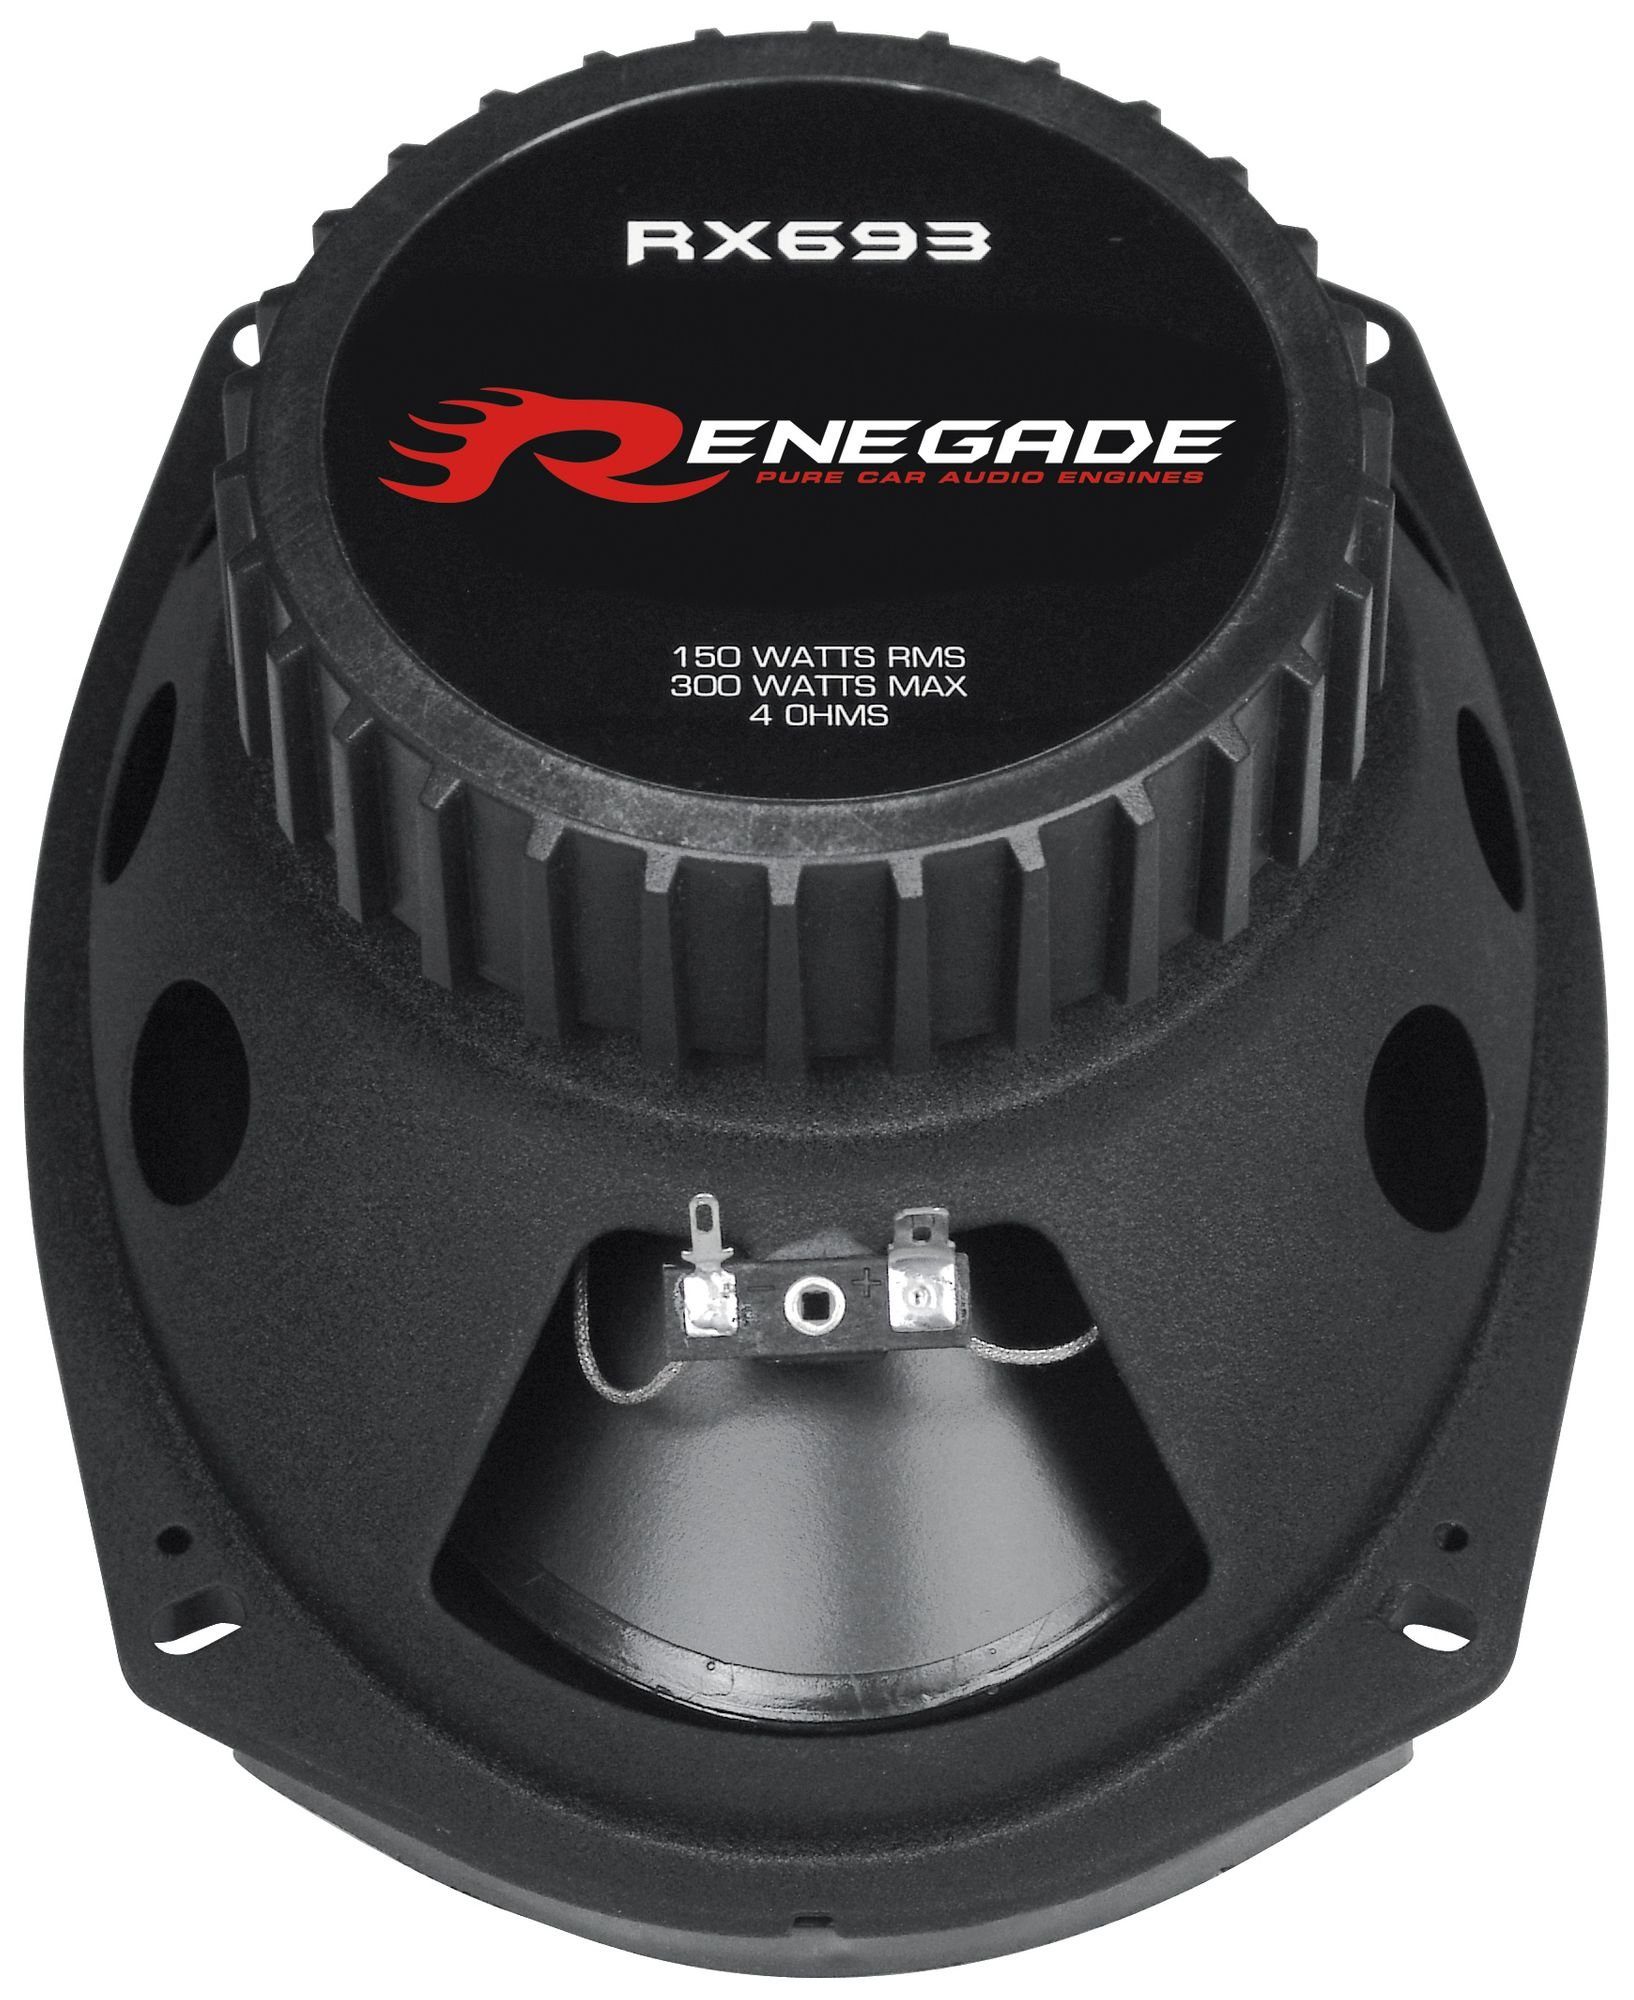 Triax-System) (Renegade Triax-System Auto-Lautsprecher - Renegade 6x9 RX-693 6x9 RX-693